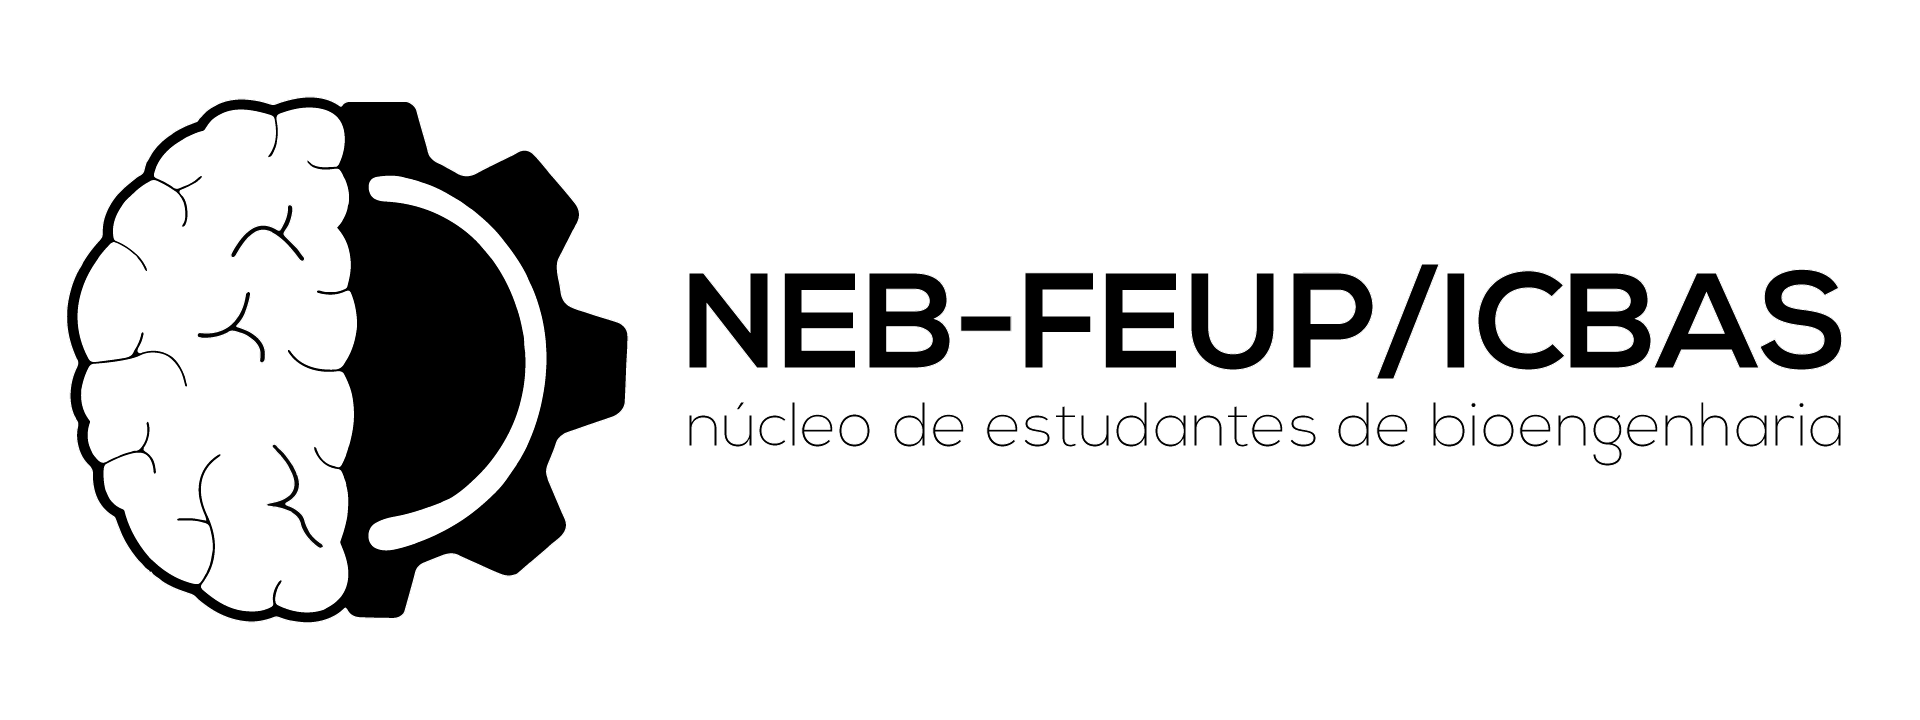 NEB-FEUP/ICBAS